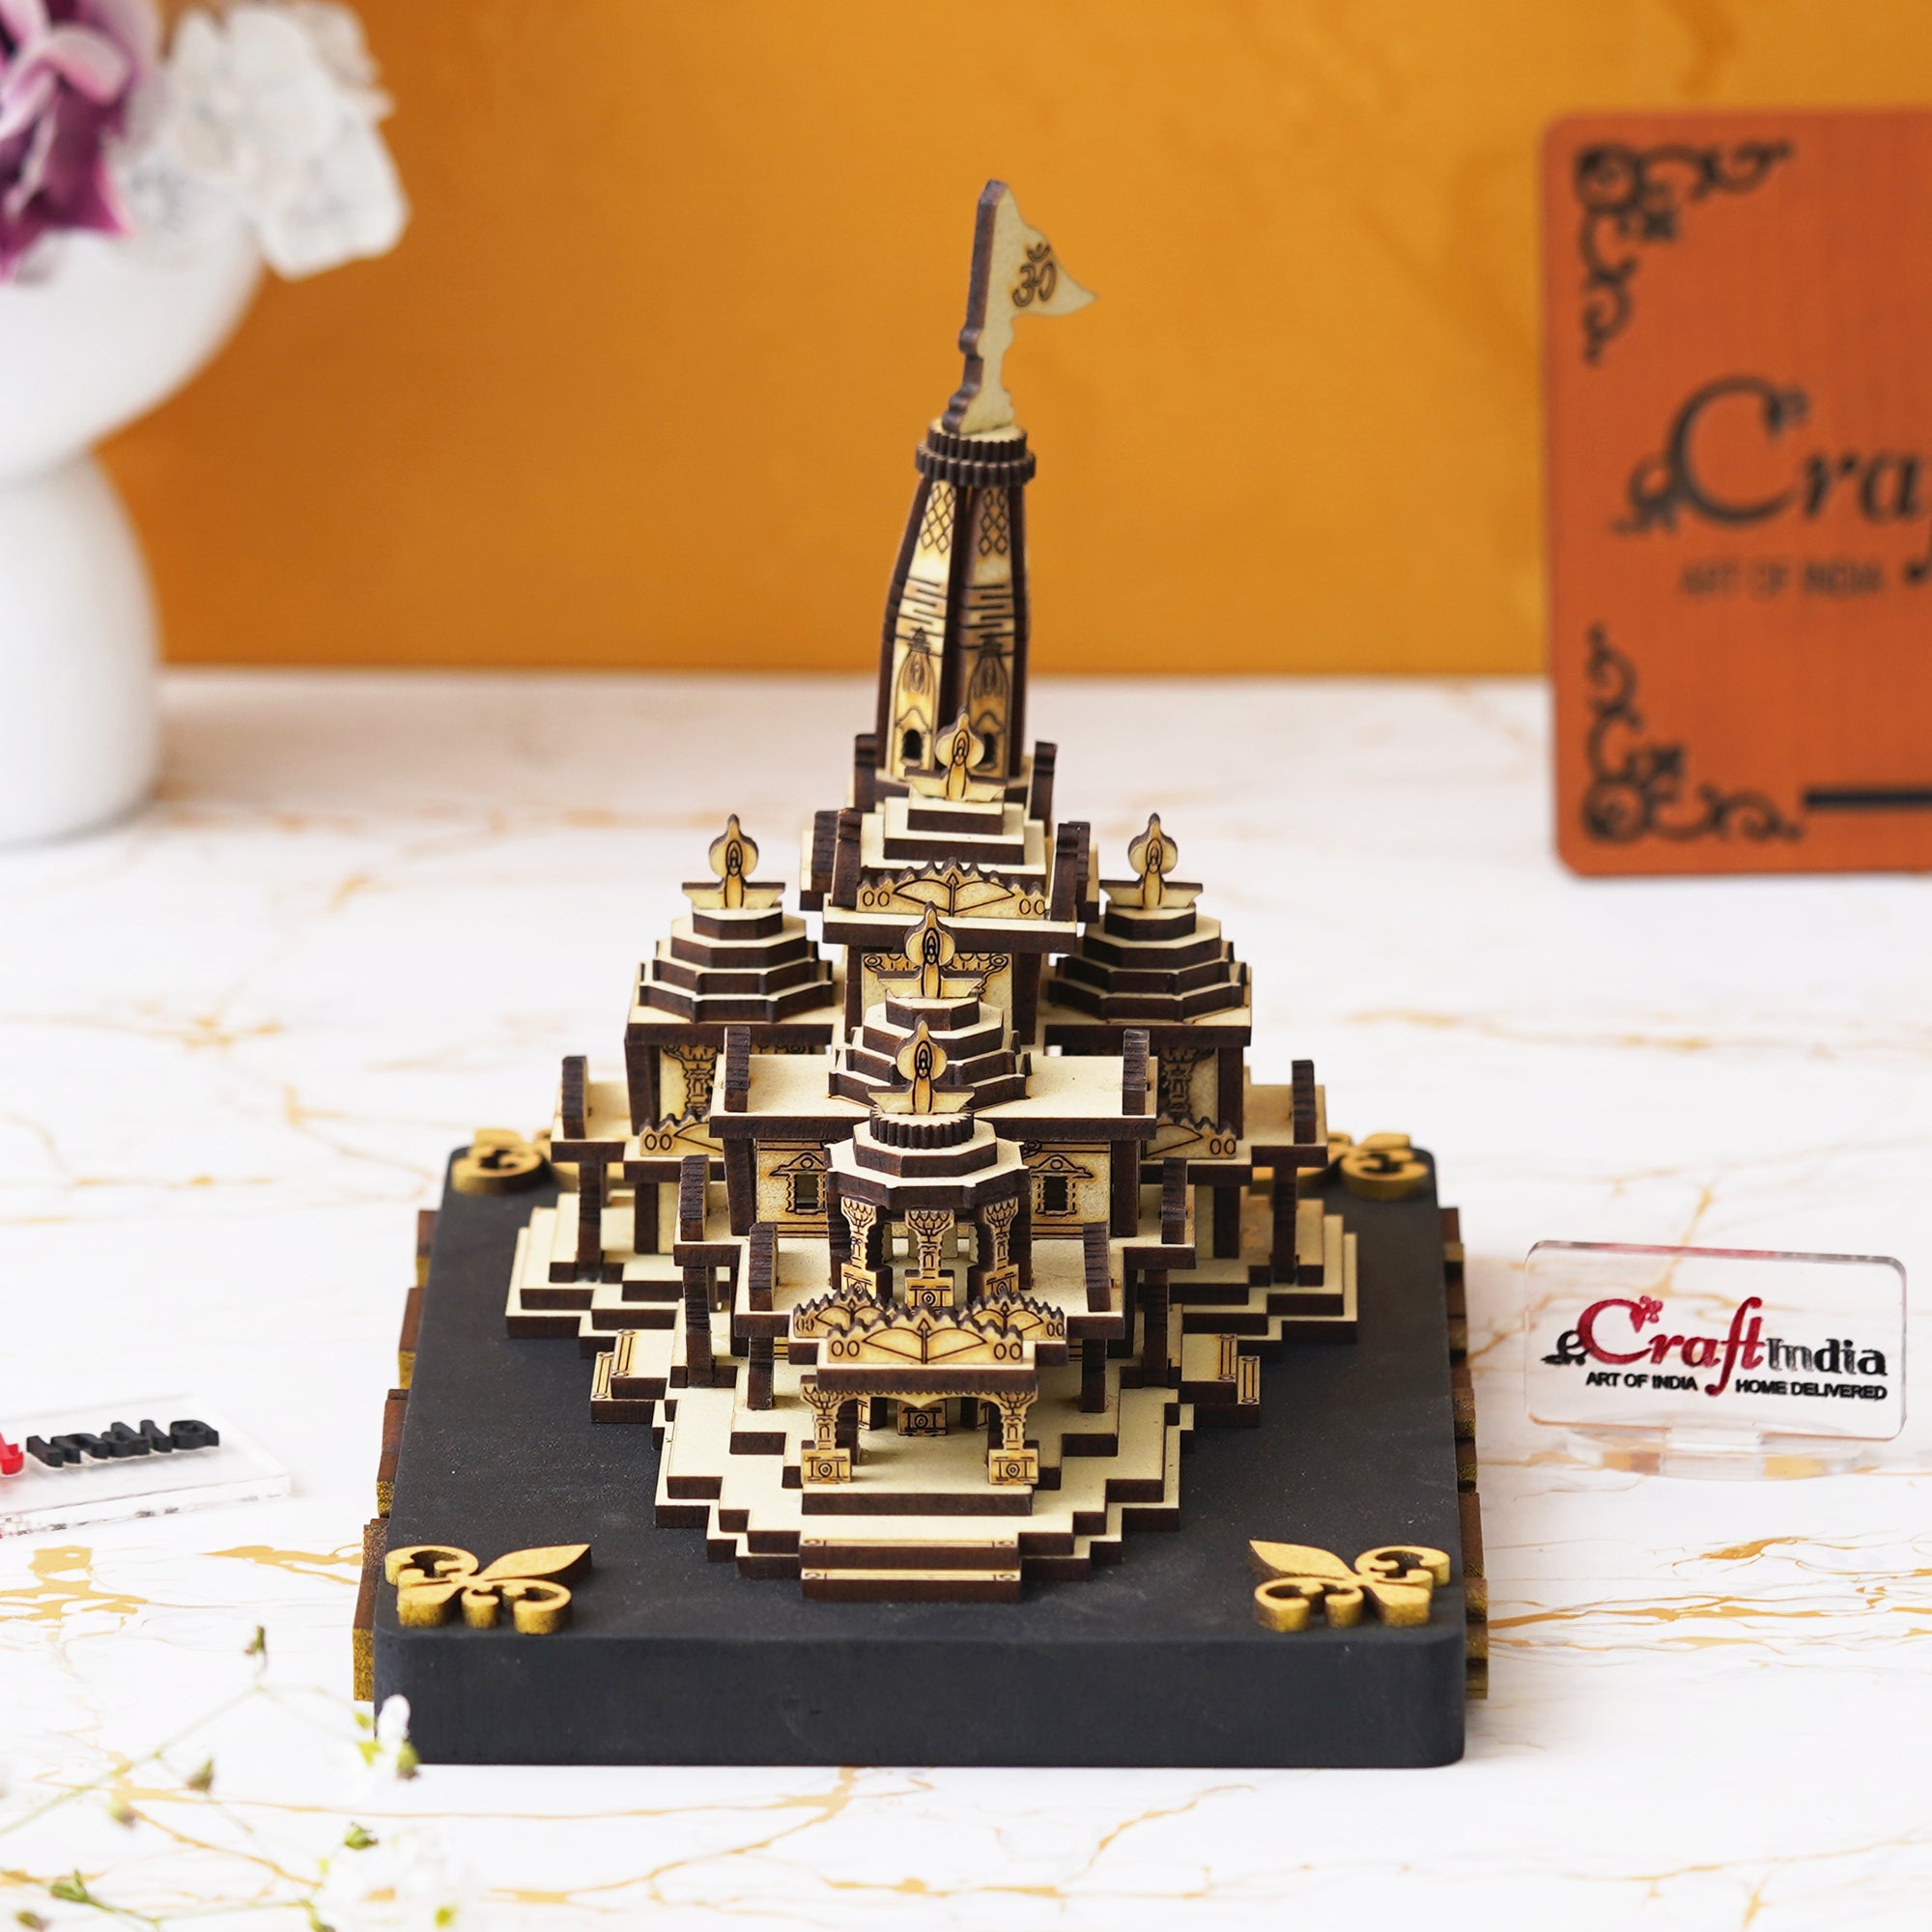 eCraftIndia Shri Ram Mandir Ayodhya Model - Wooden MDF Craftsmanship Authentic Designer Temple - Ideal for Home Temple, Decor, and Spiritual Gifting (Beige, Gold) 5